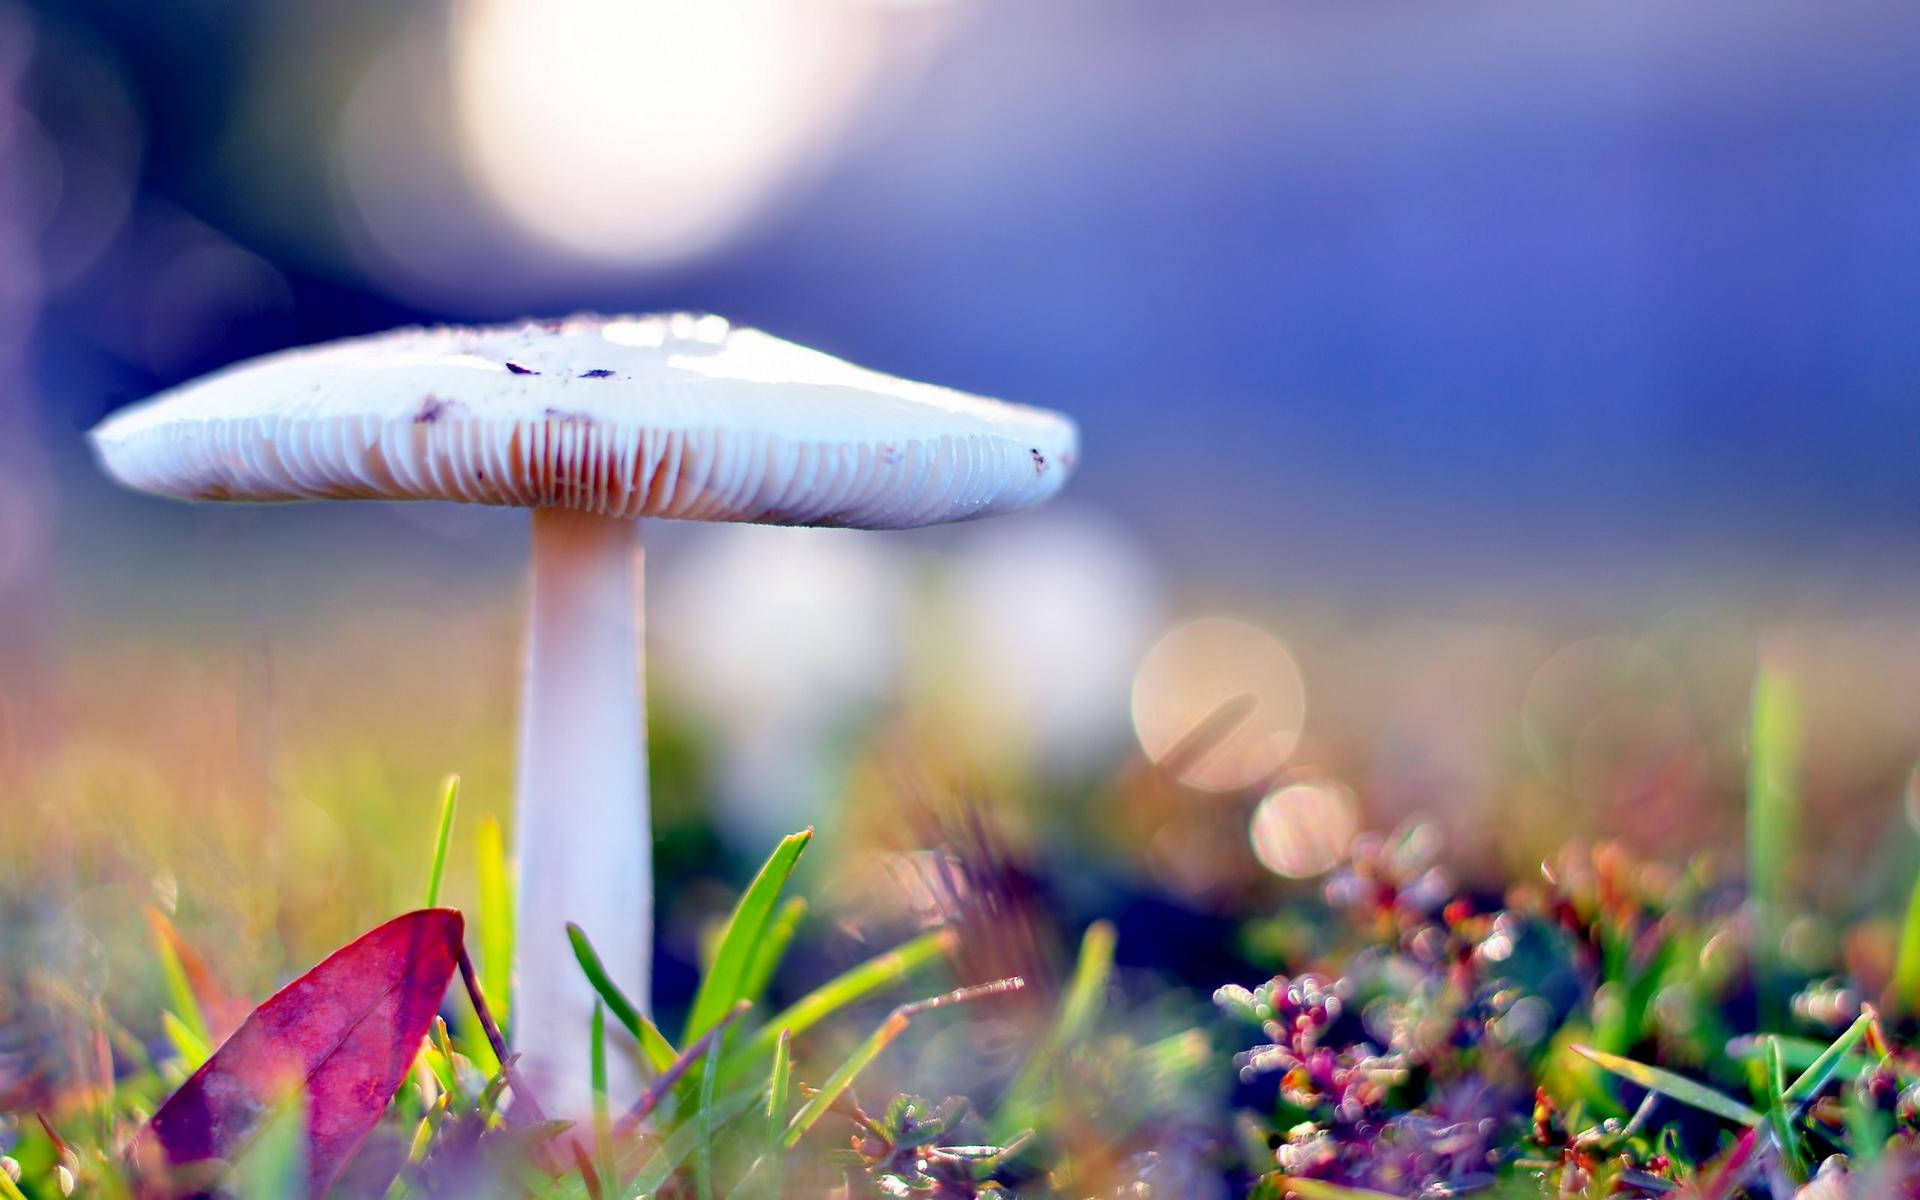 Enchanting Woodland Scenery With Colorful Mushrooms Background